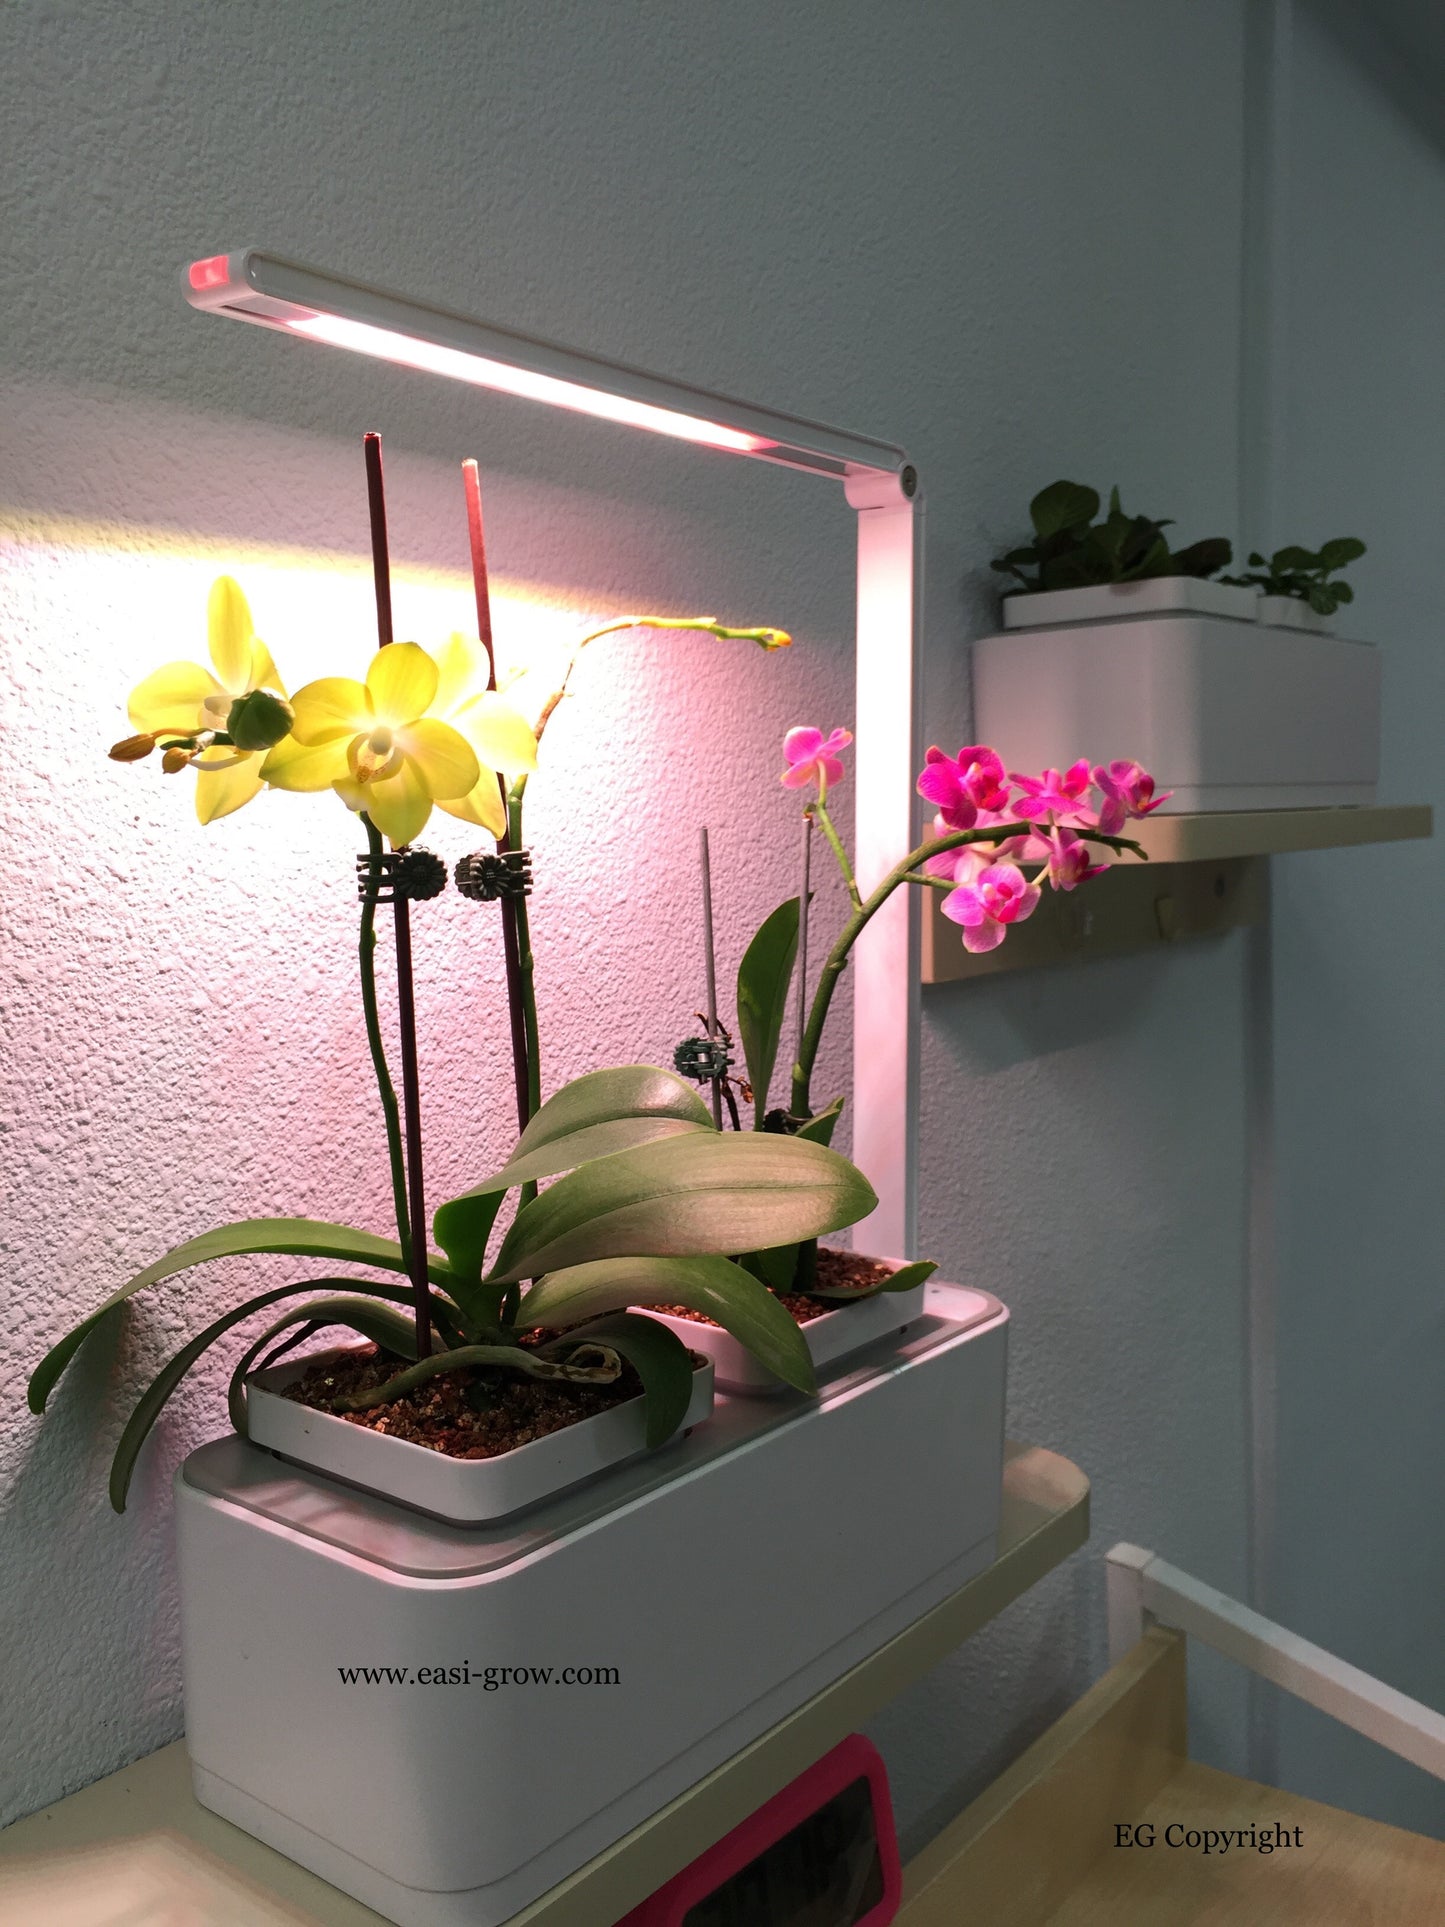 Hydroponic Mini Garden LED (Promotion Sales)